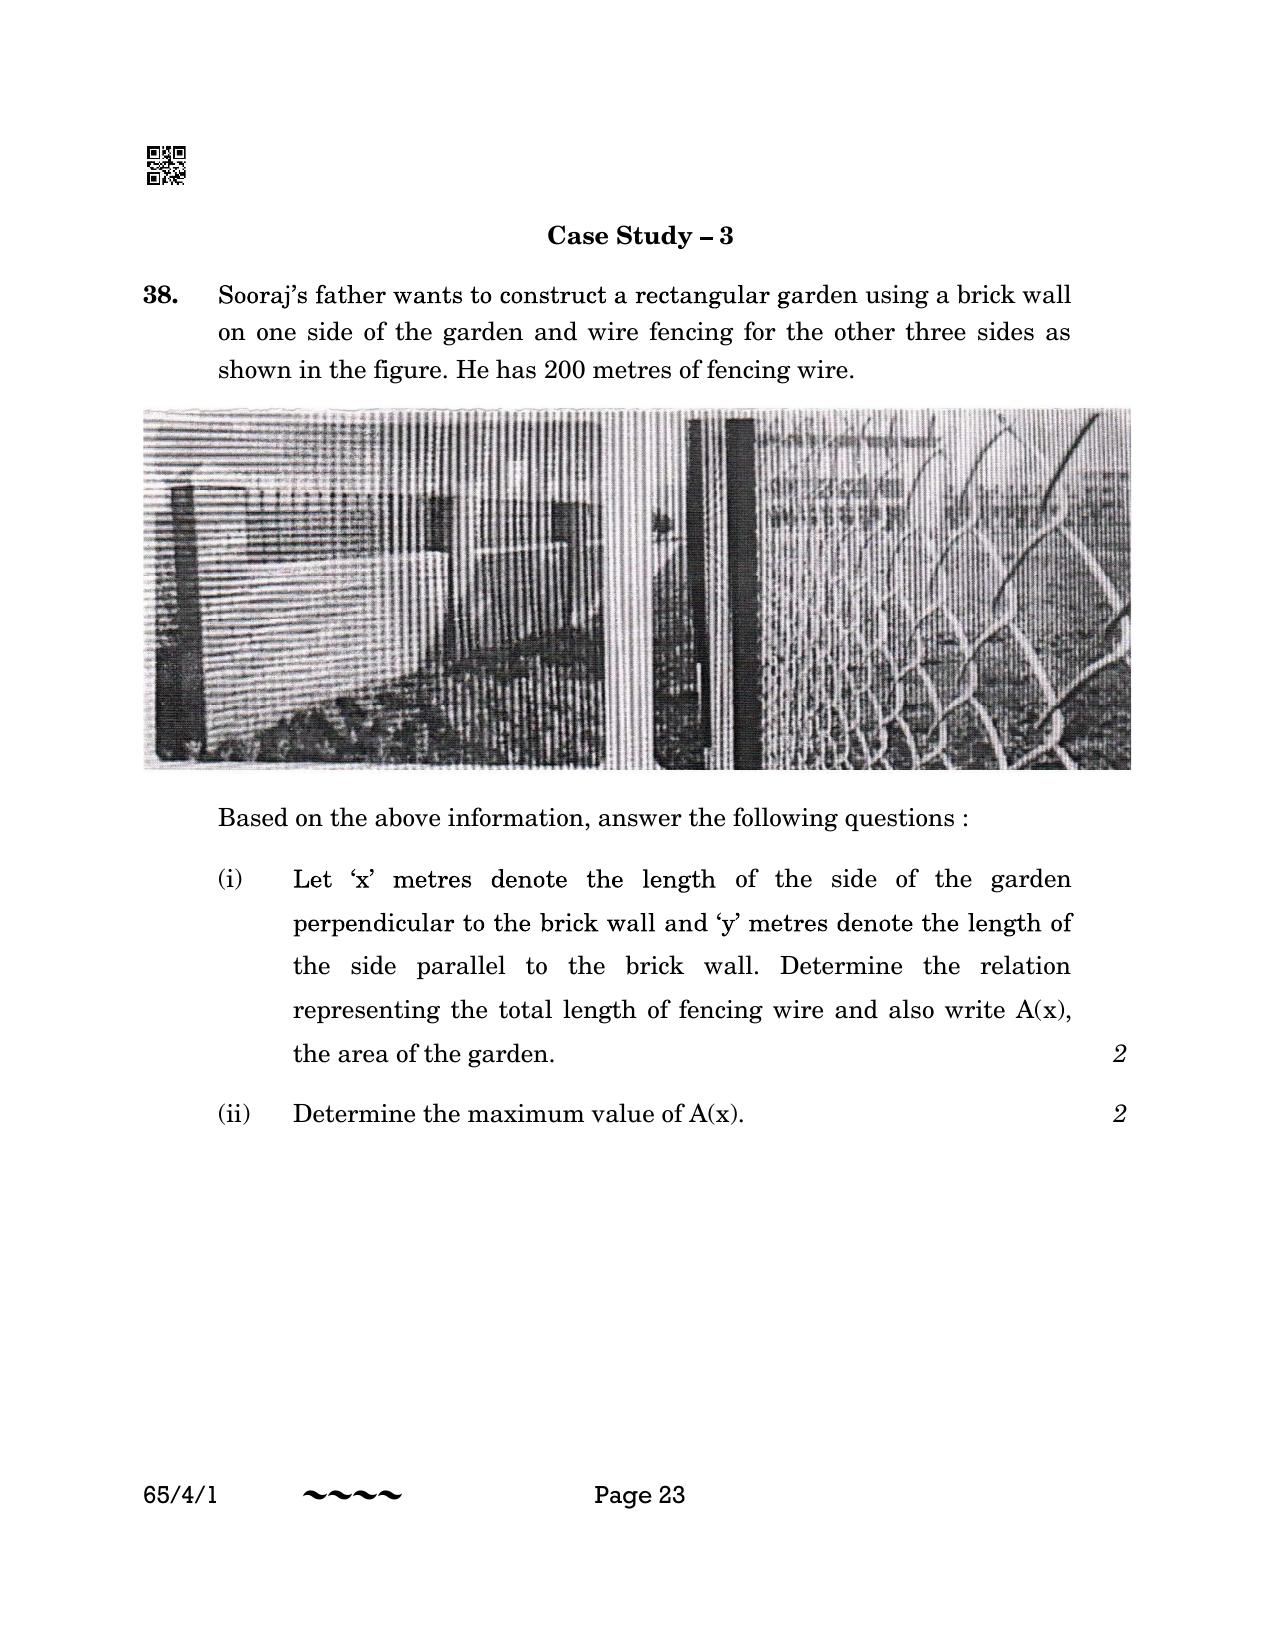 CBSE Class 12 65-4-1 MATHEMATICS 2023 Question Paper - Page 23